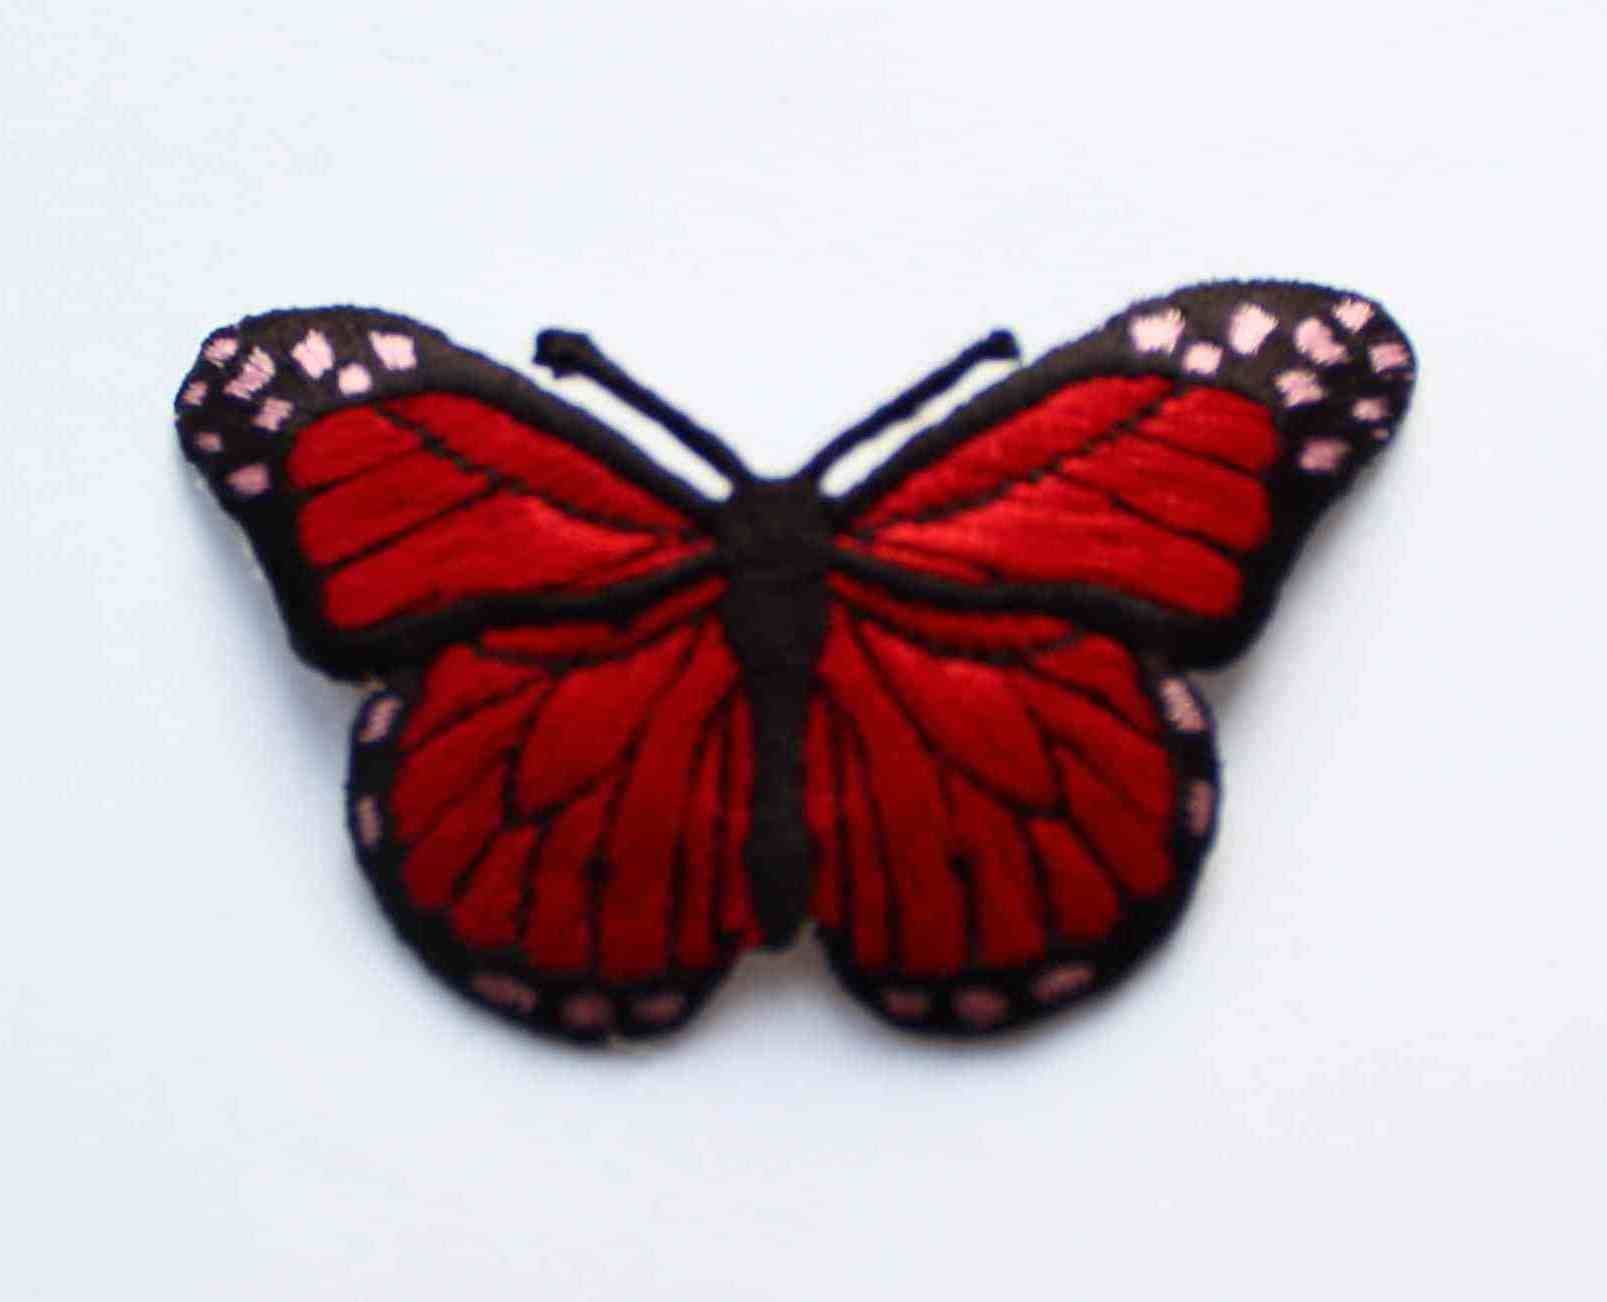 0146 Термоаппликация красная бабочка 70*40мм